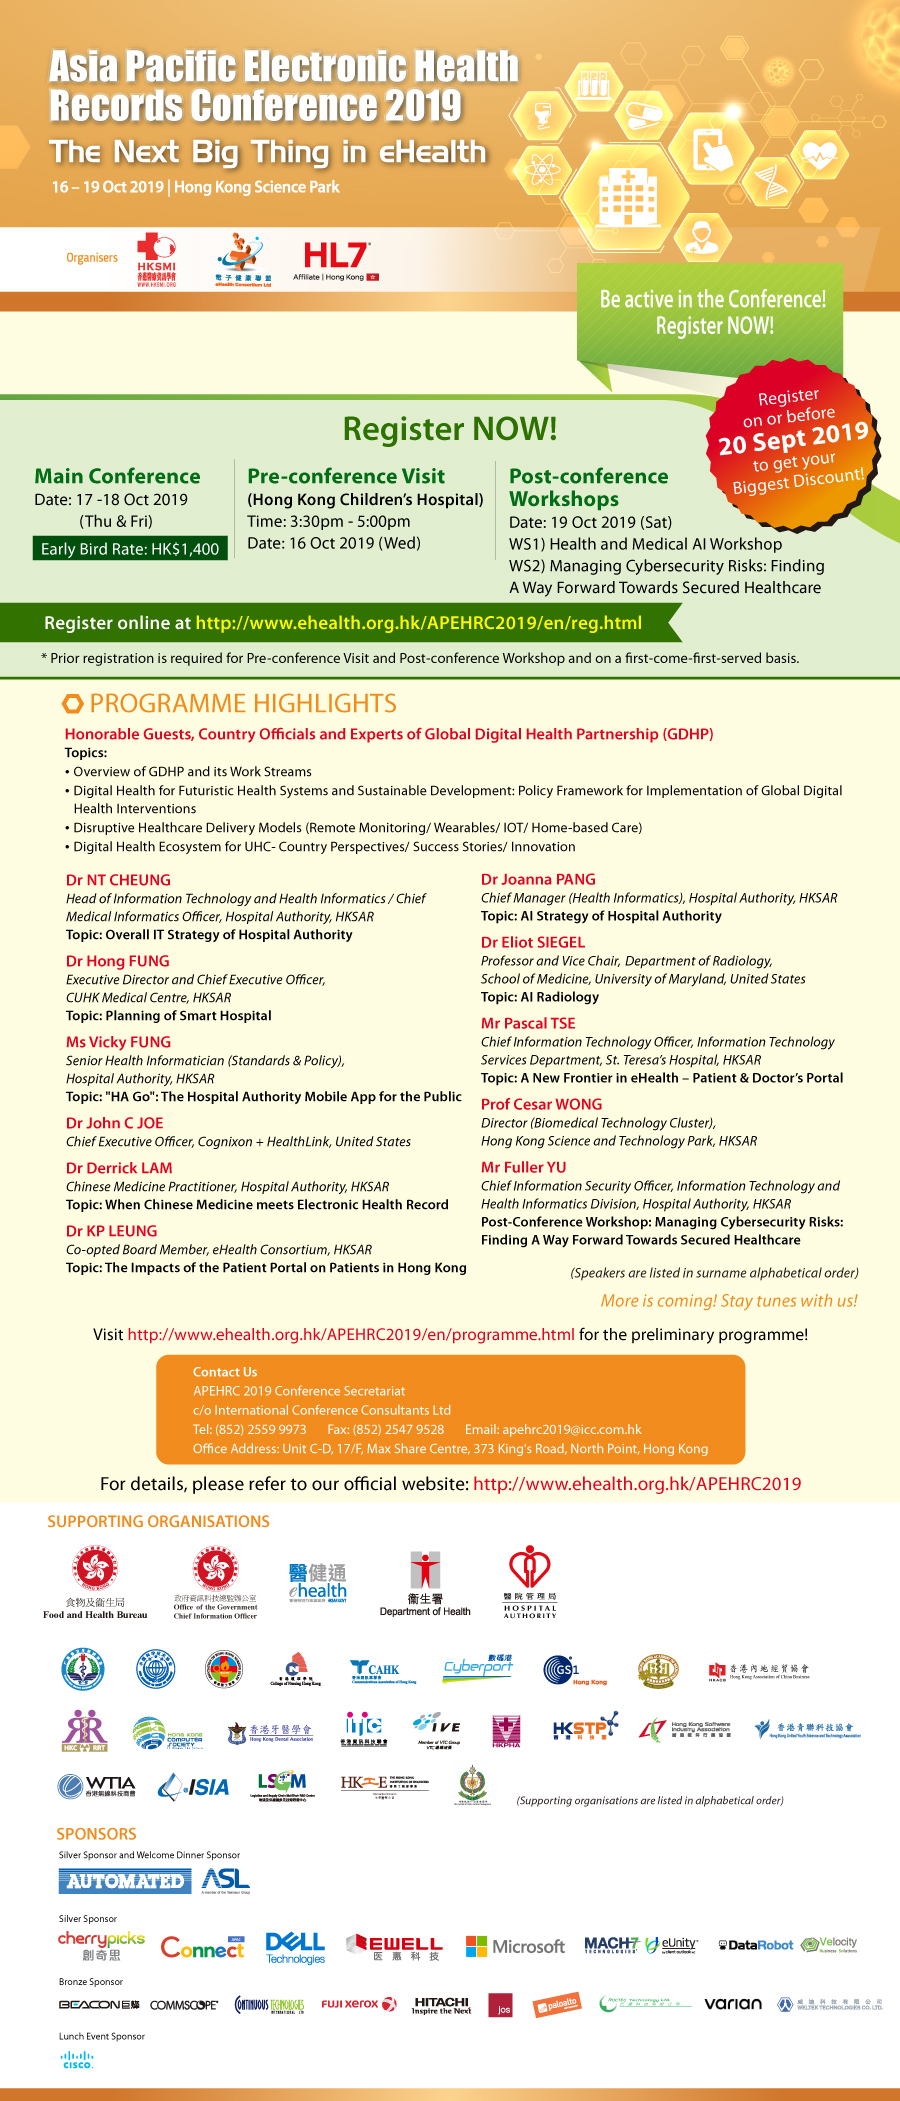 Stanford Medicine Symposium - Novel Strategies for Treatment of Neurologic Disorders